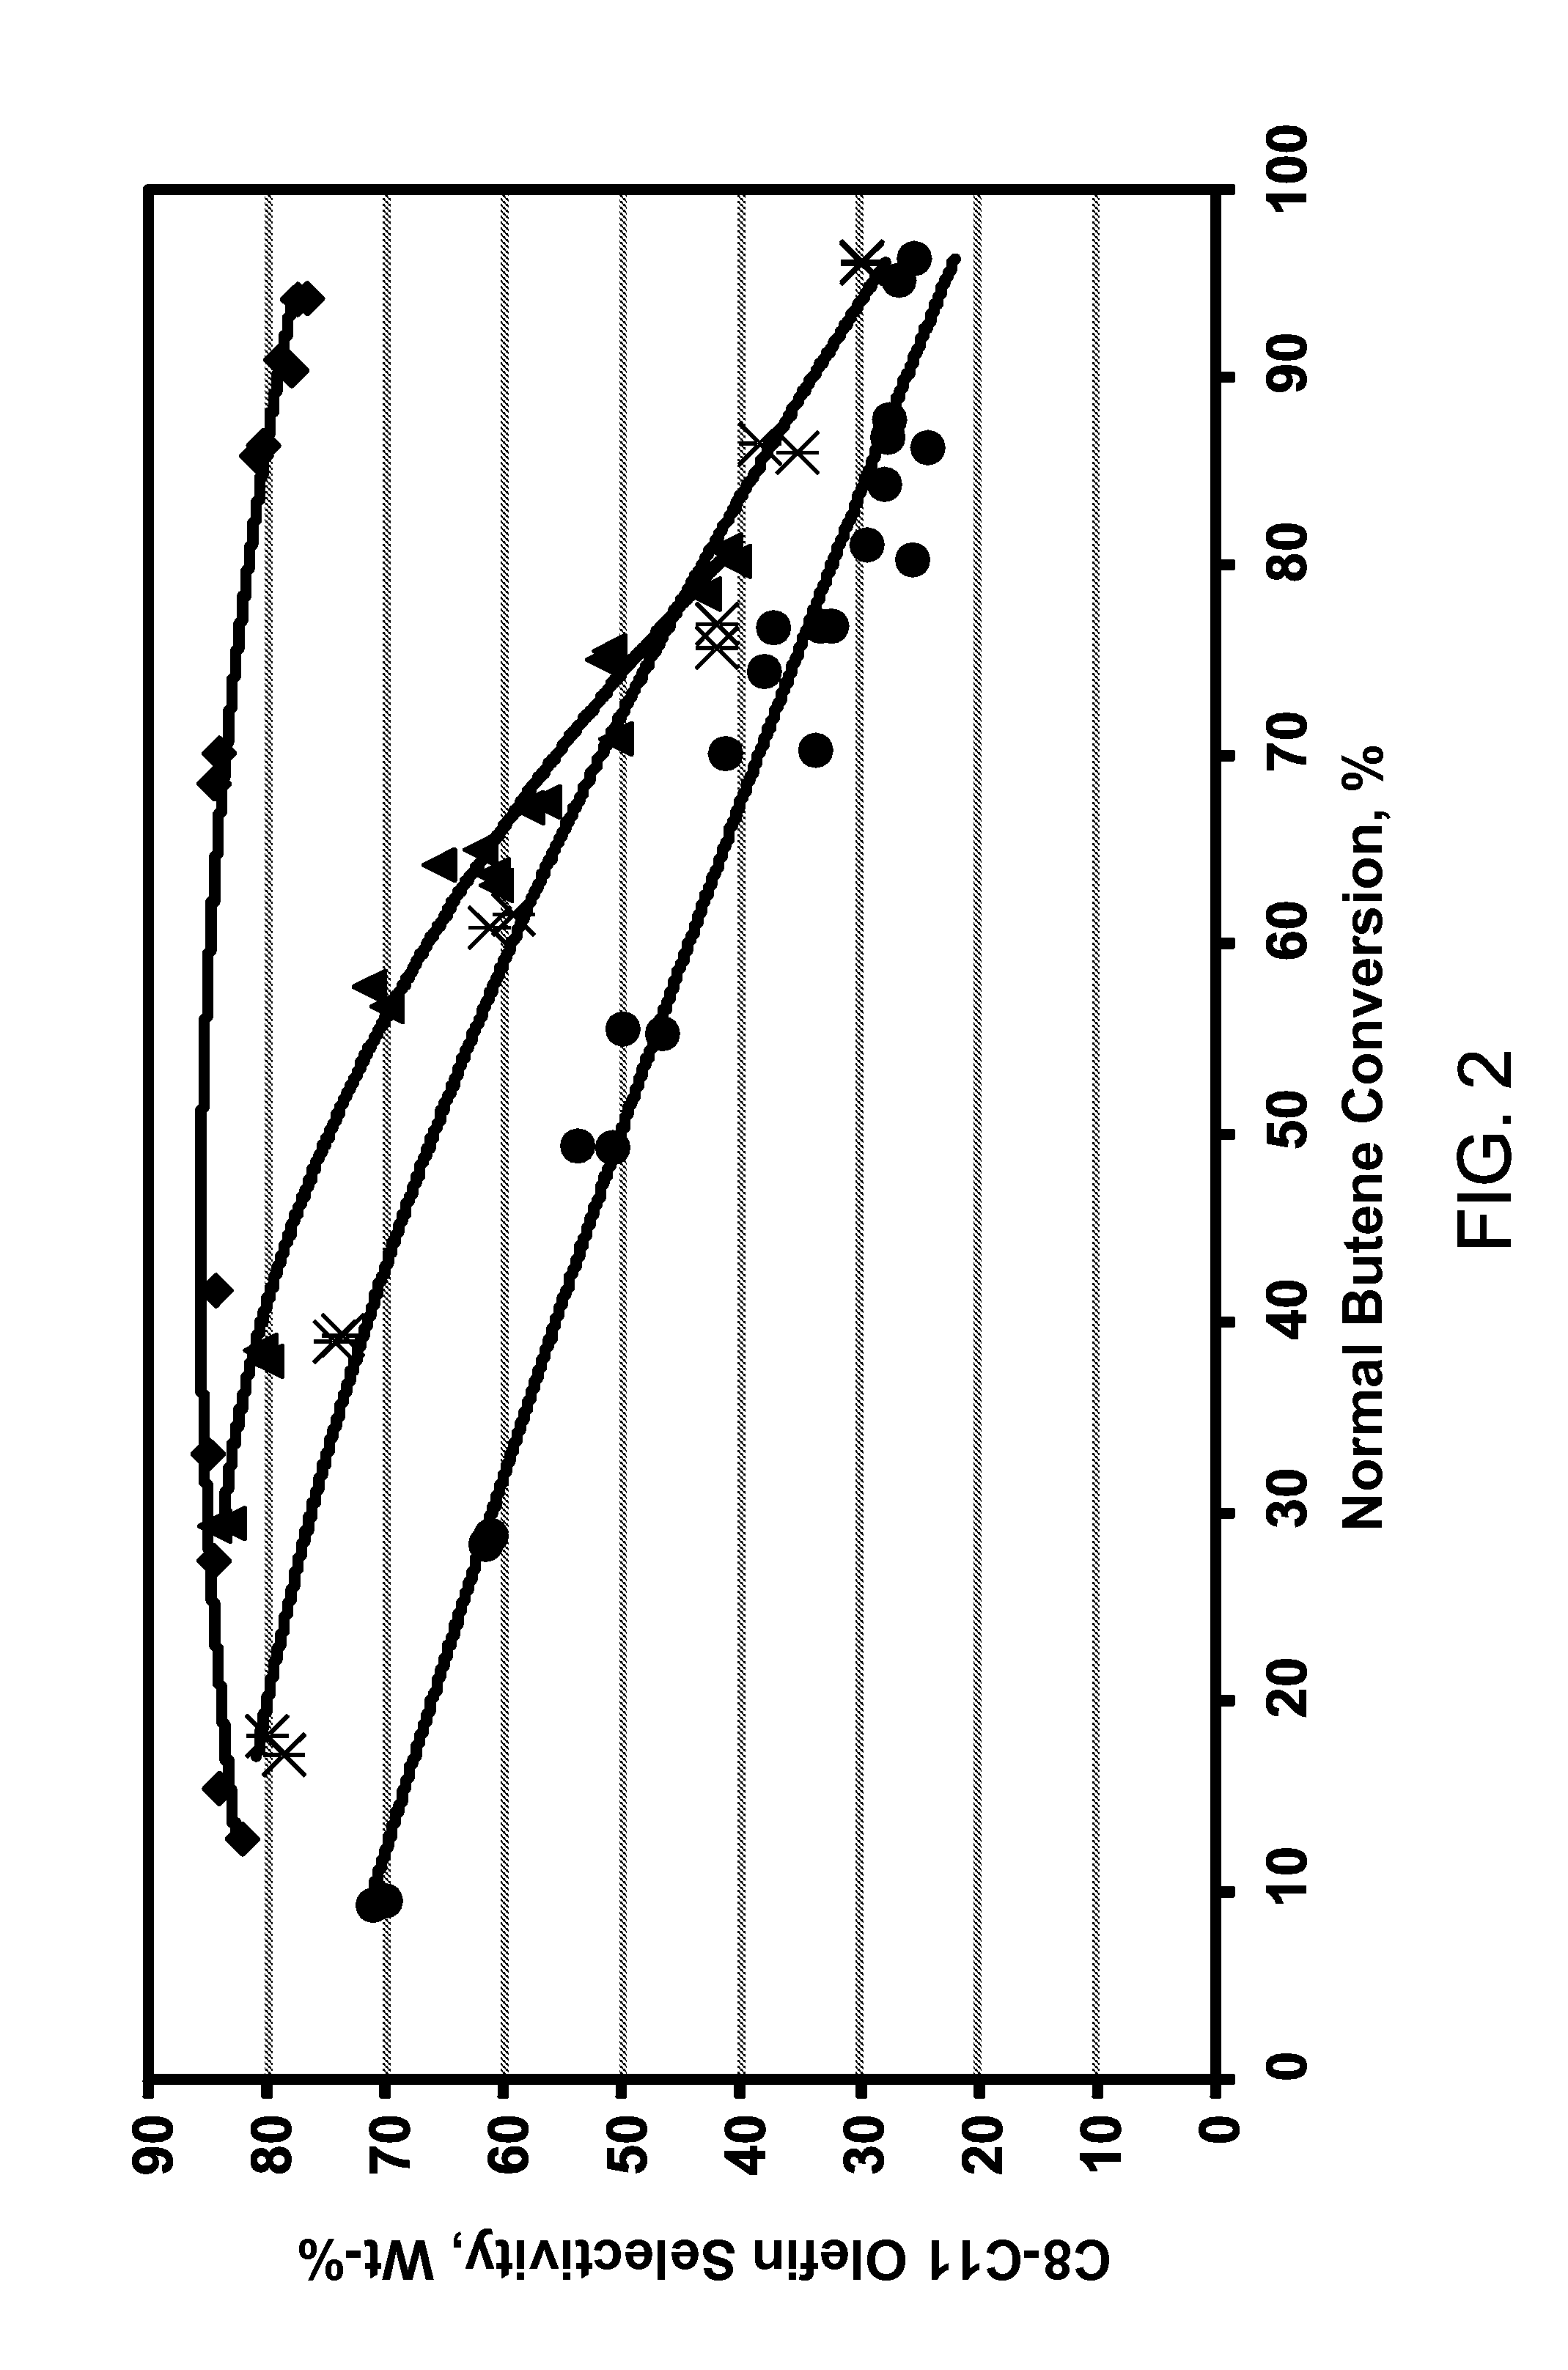 Process for oligomerizing gasoline with high yield